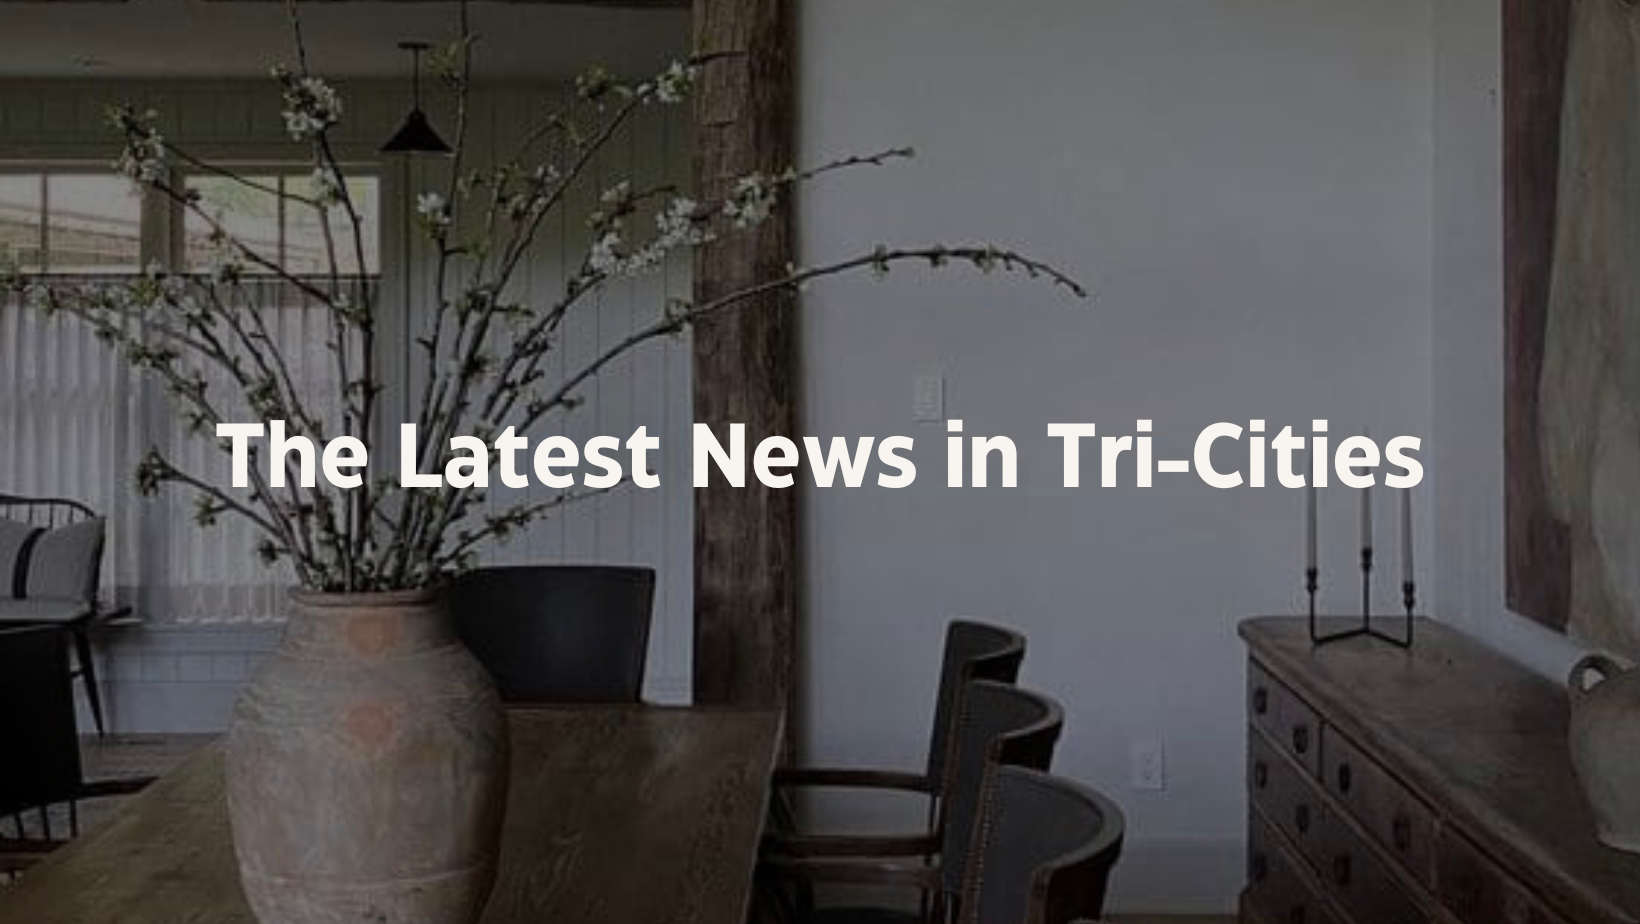 real estate development news in tri-cities